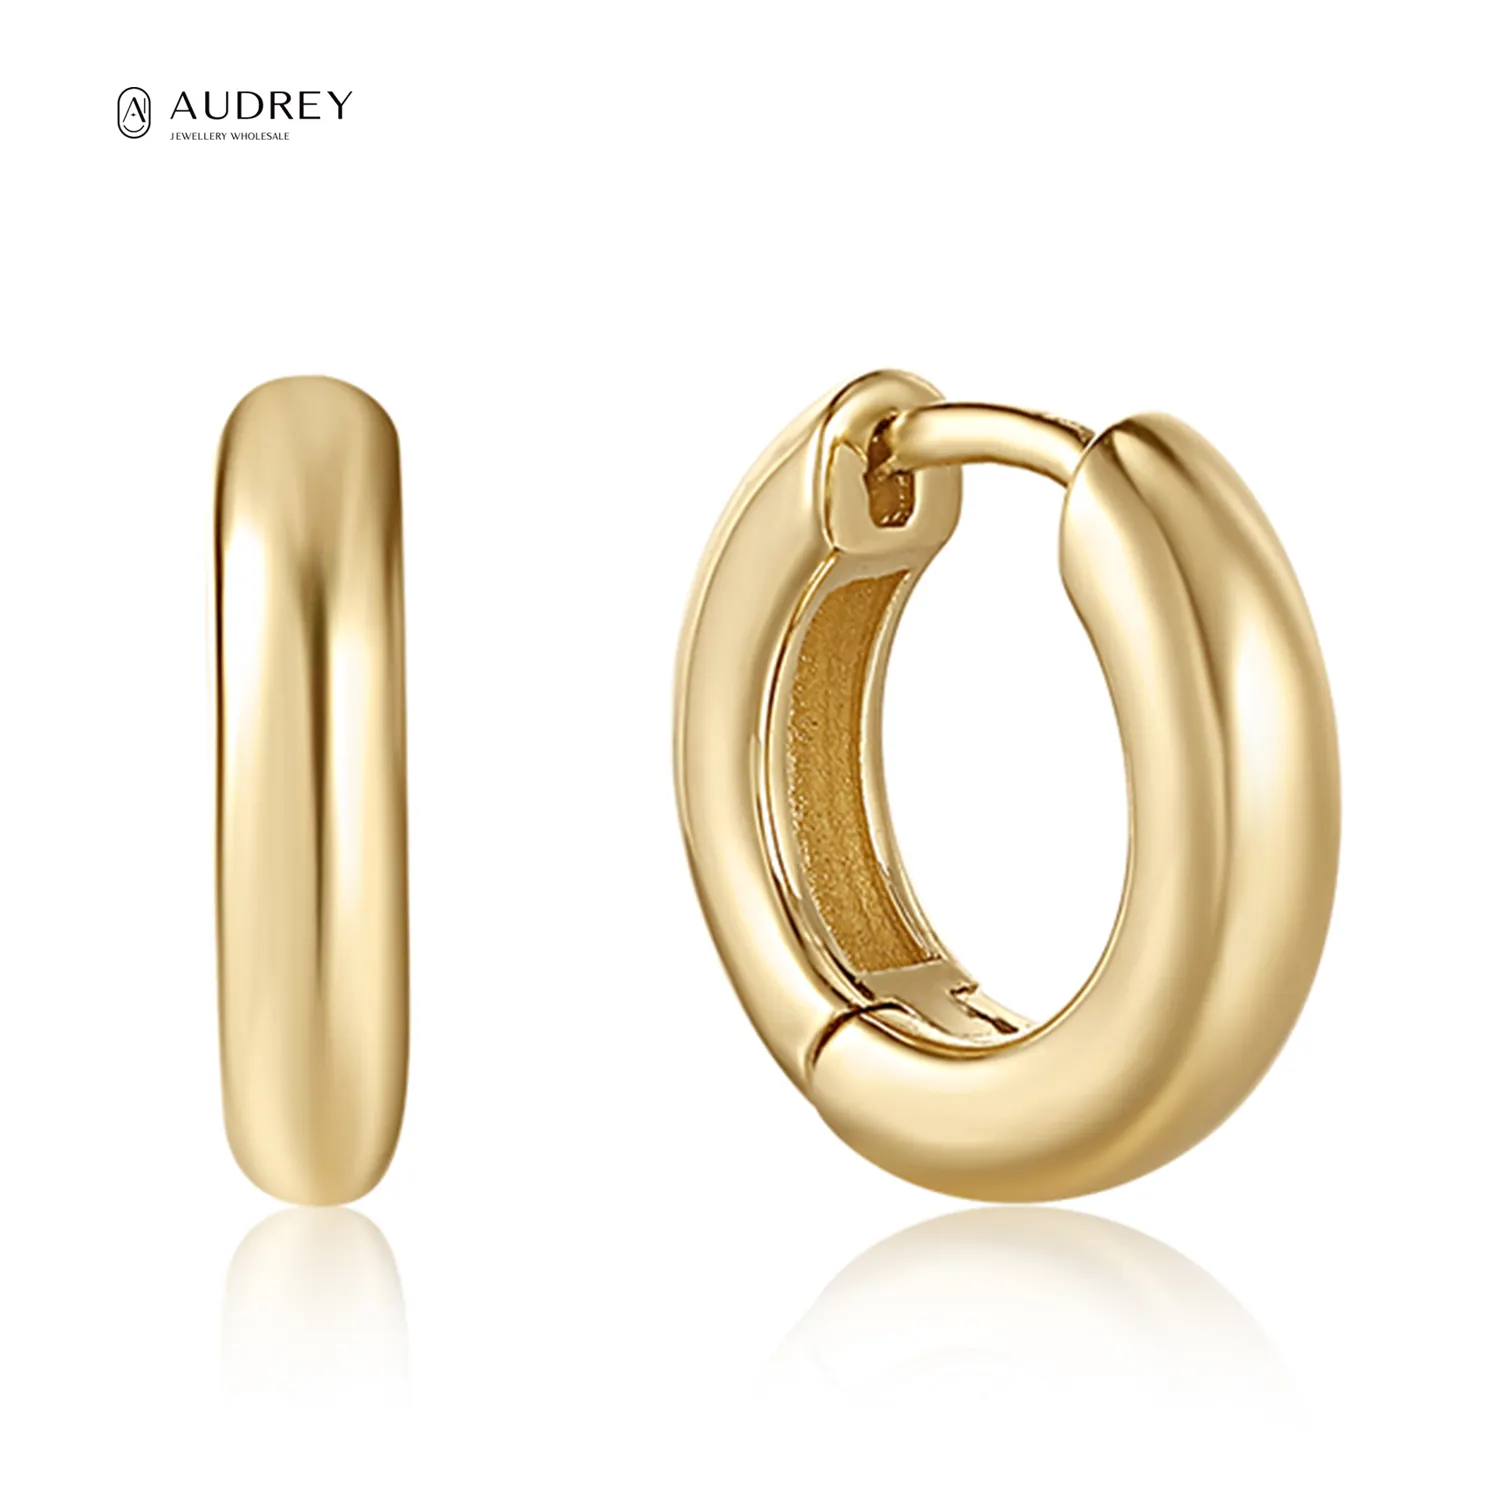 Audrey Hot Sale Classic Earrings High Quality Jewelry Silver Huggie Earrings 925 Sterling 14K Gold Plated Hoop Earring For Women